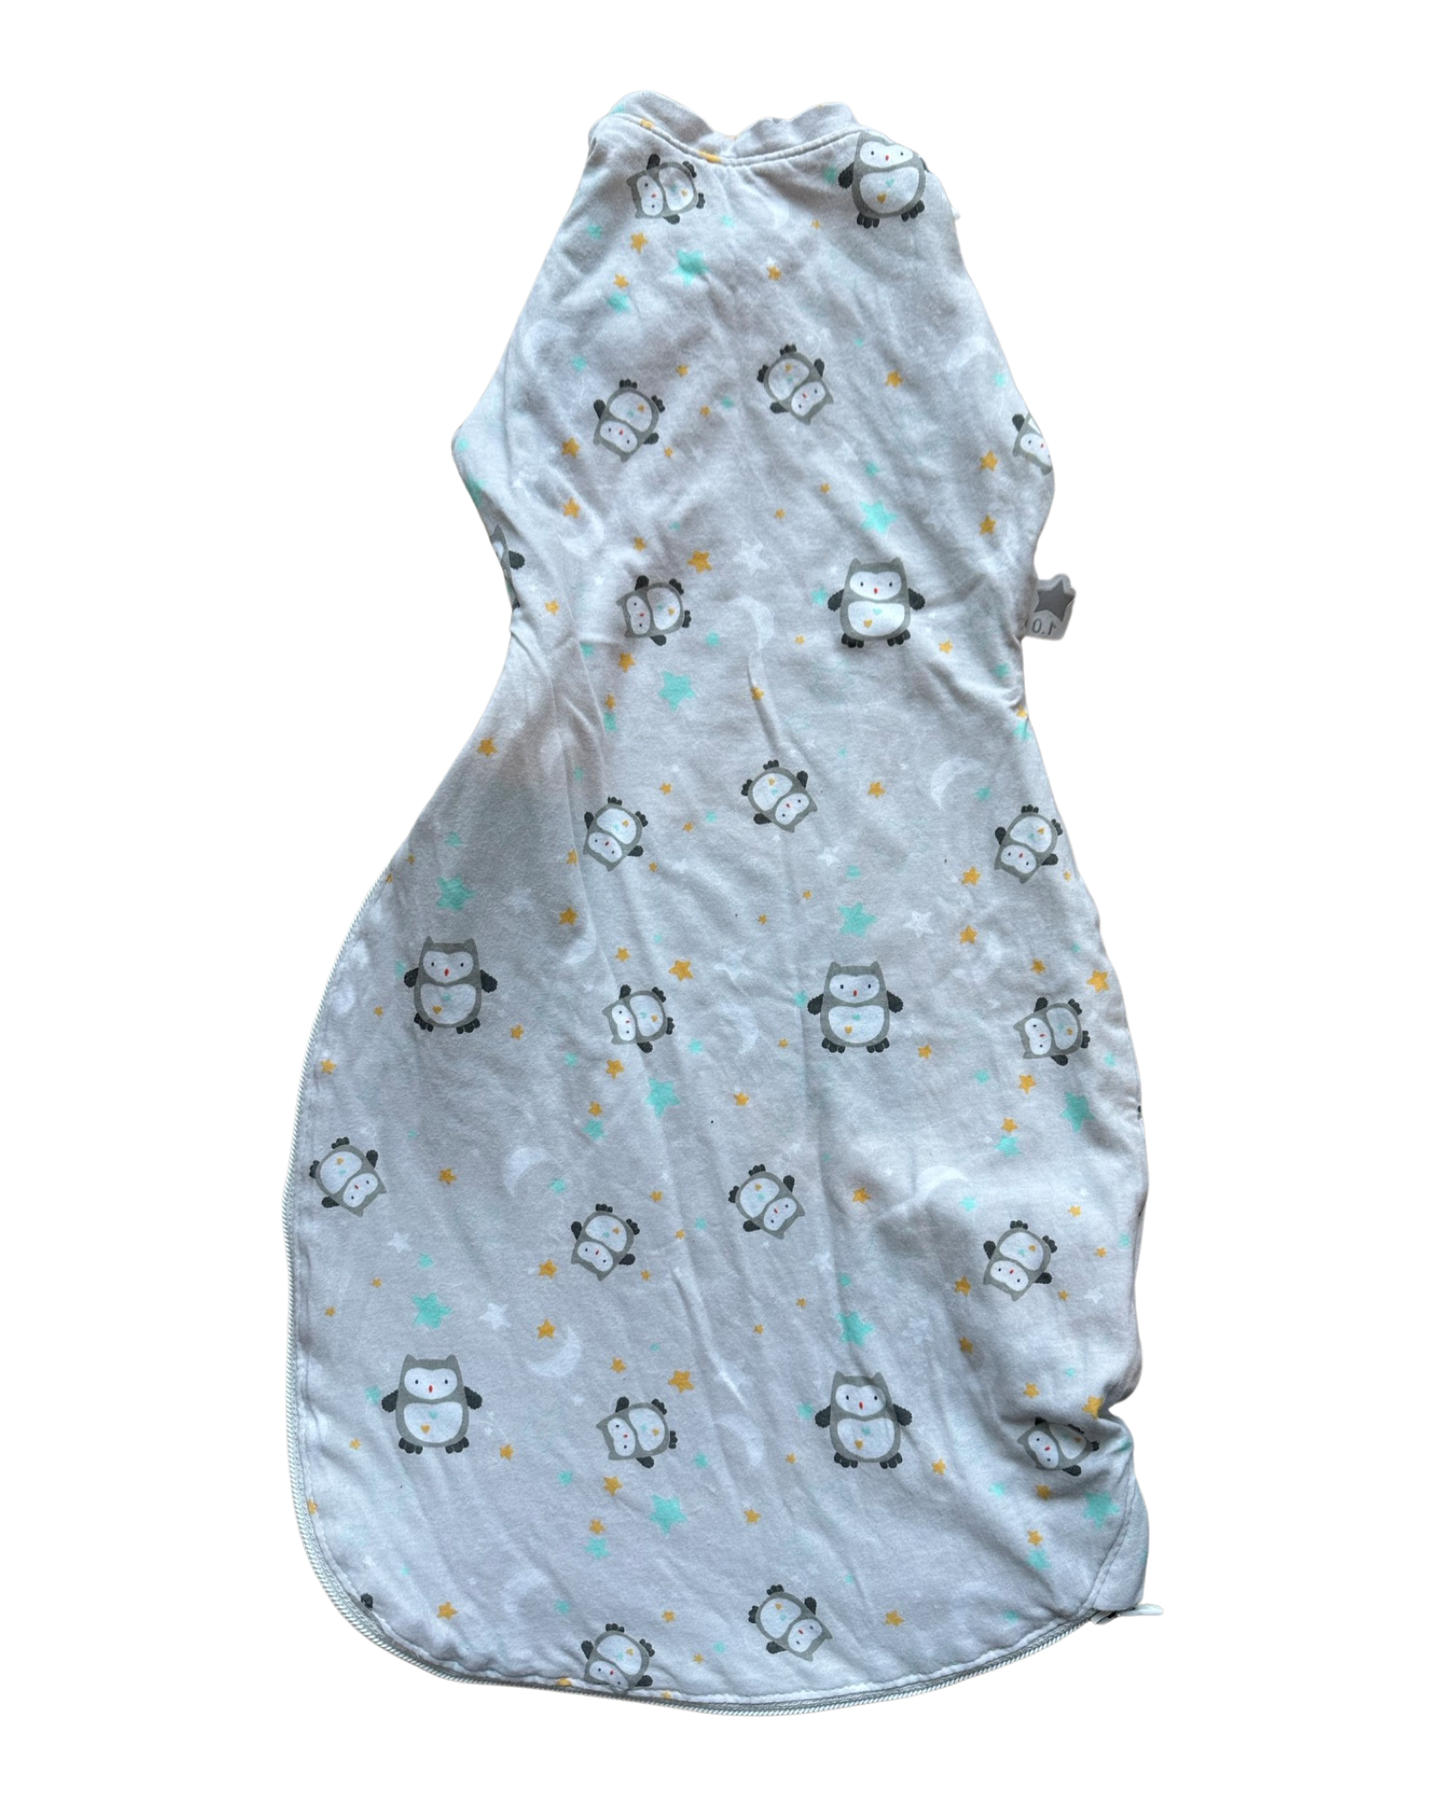 Tommy Tippee owl print sleeping bag (size 0-4mths)